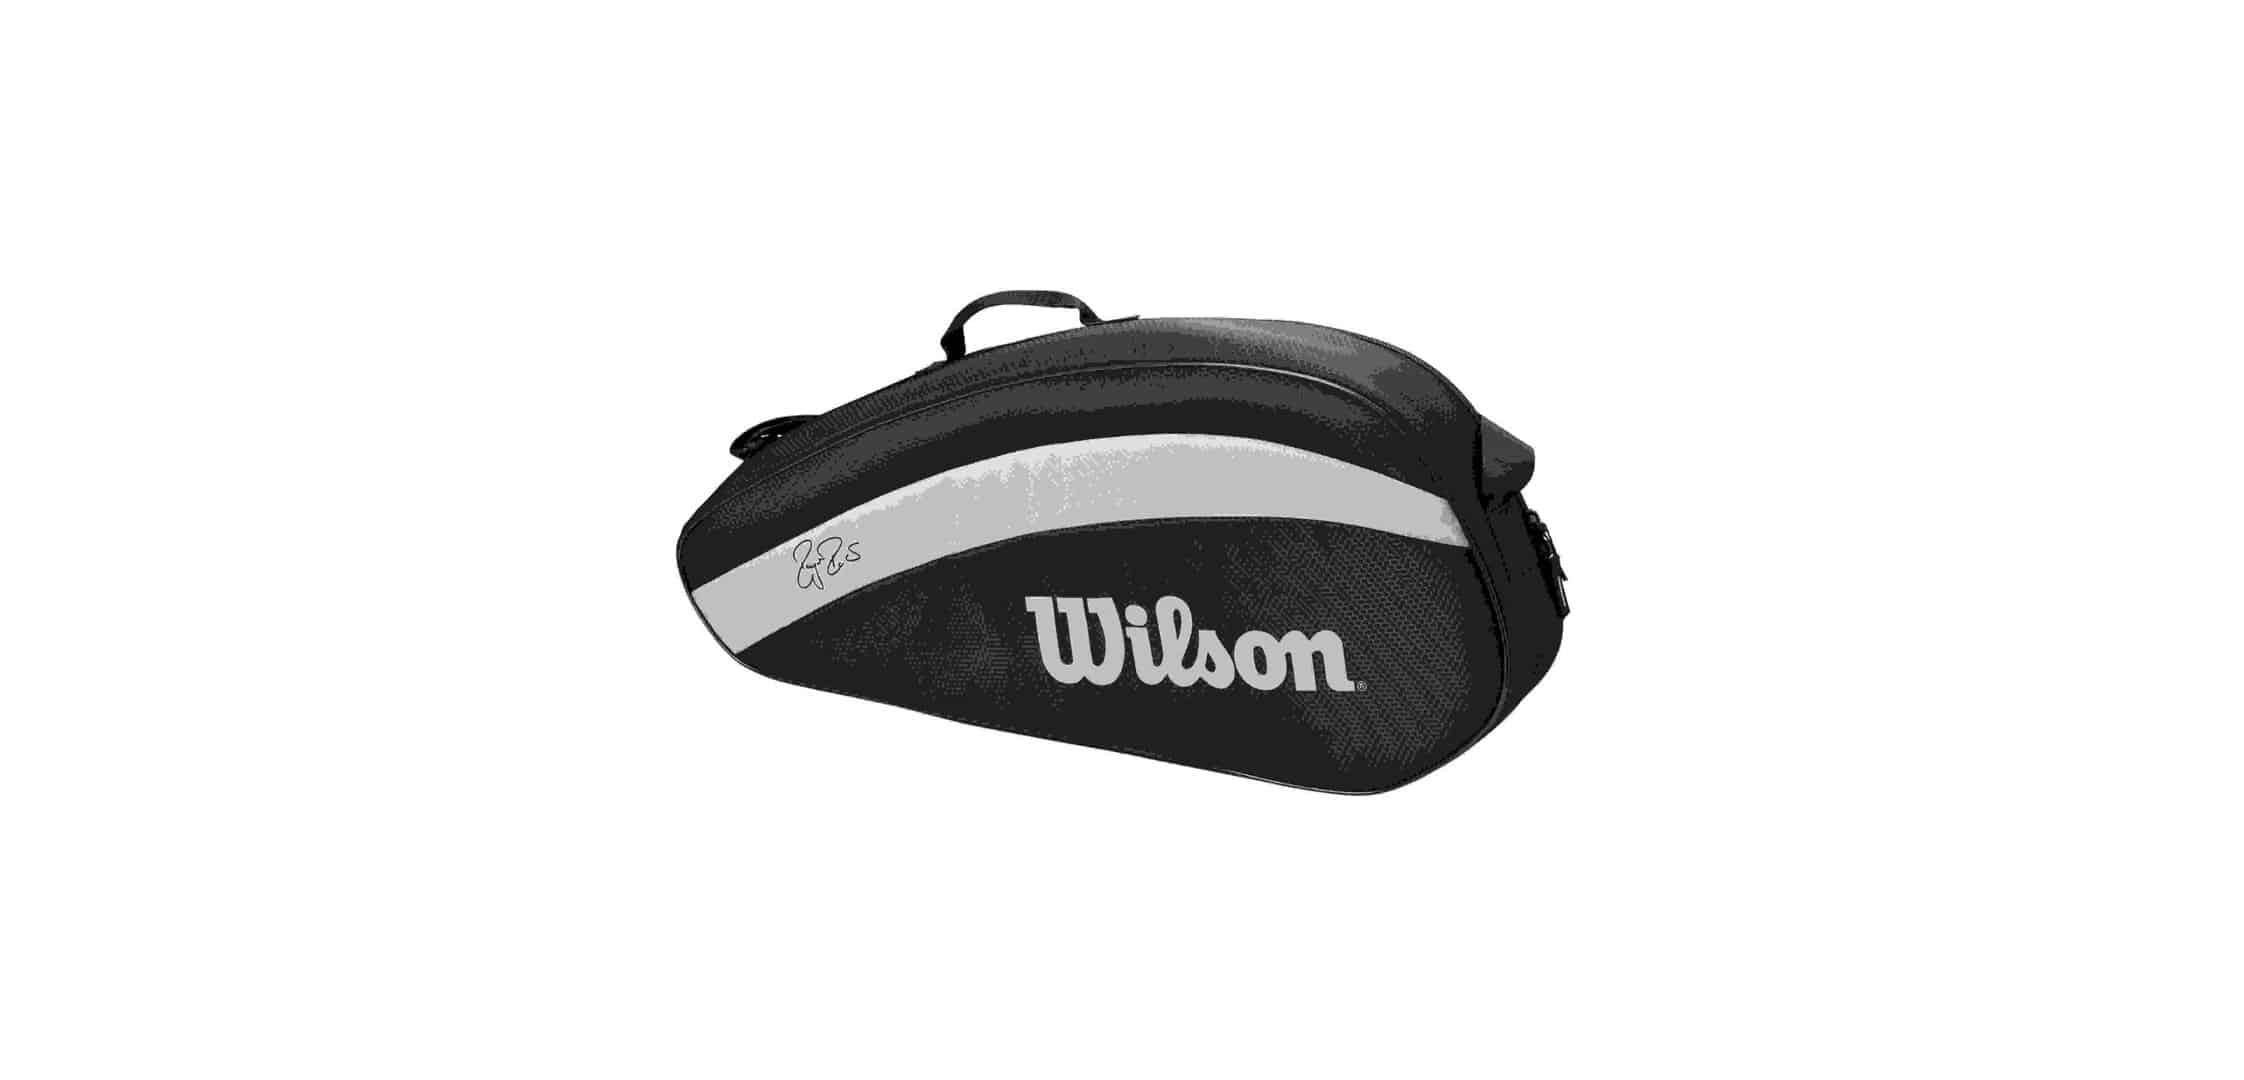 Wilson Tennis Racket Bag RF FED Team 3 Rackets - Black